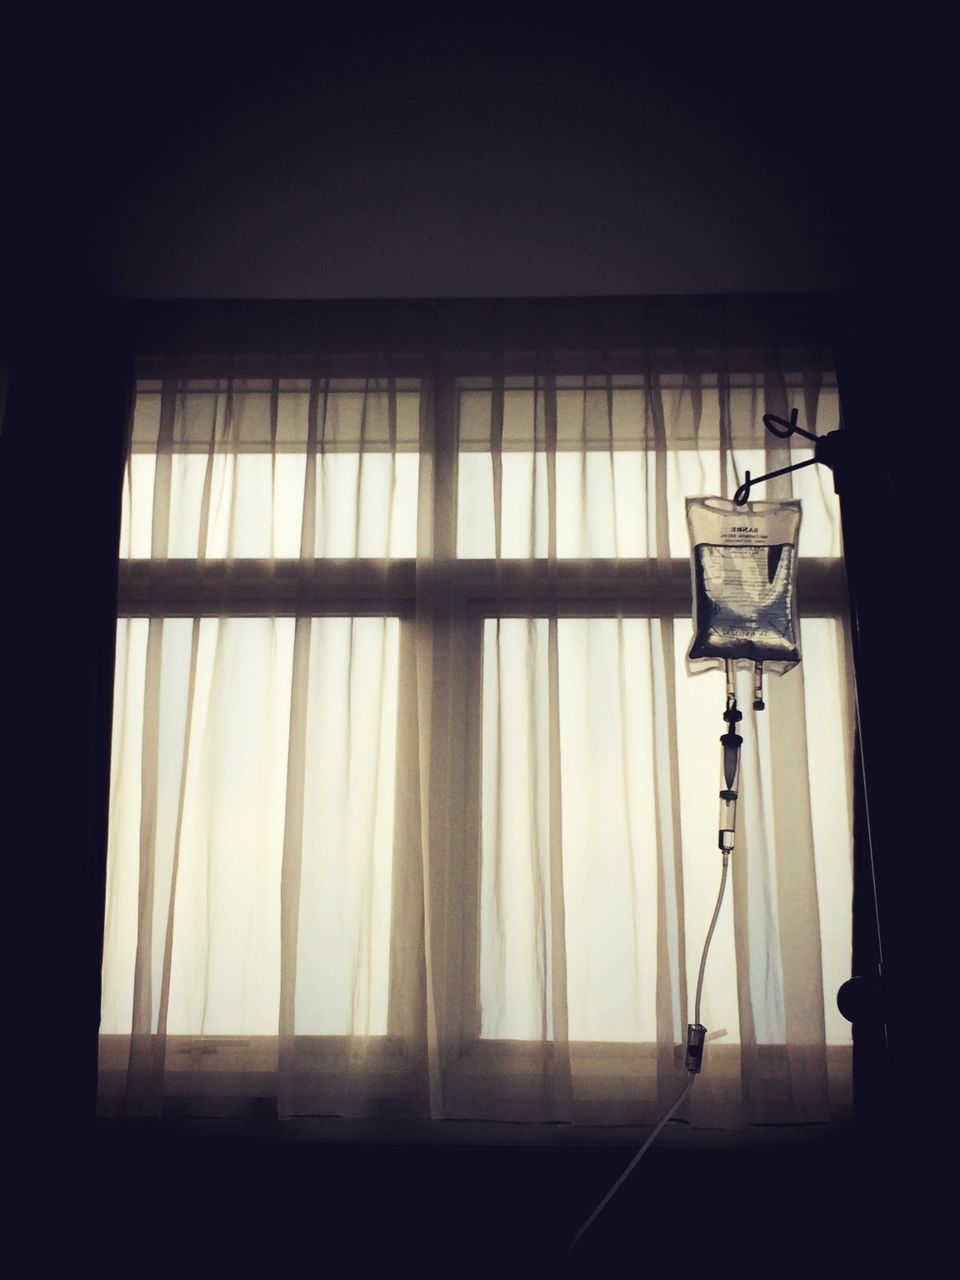 Iv drip by window in hospital